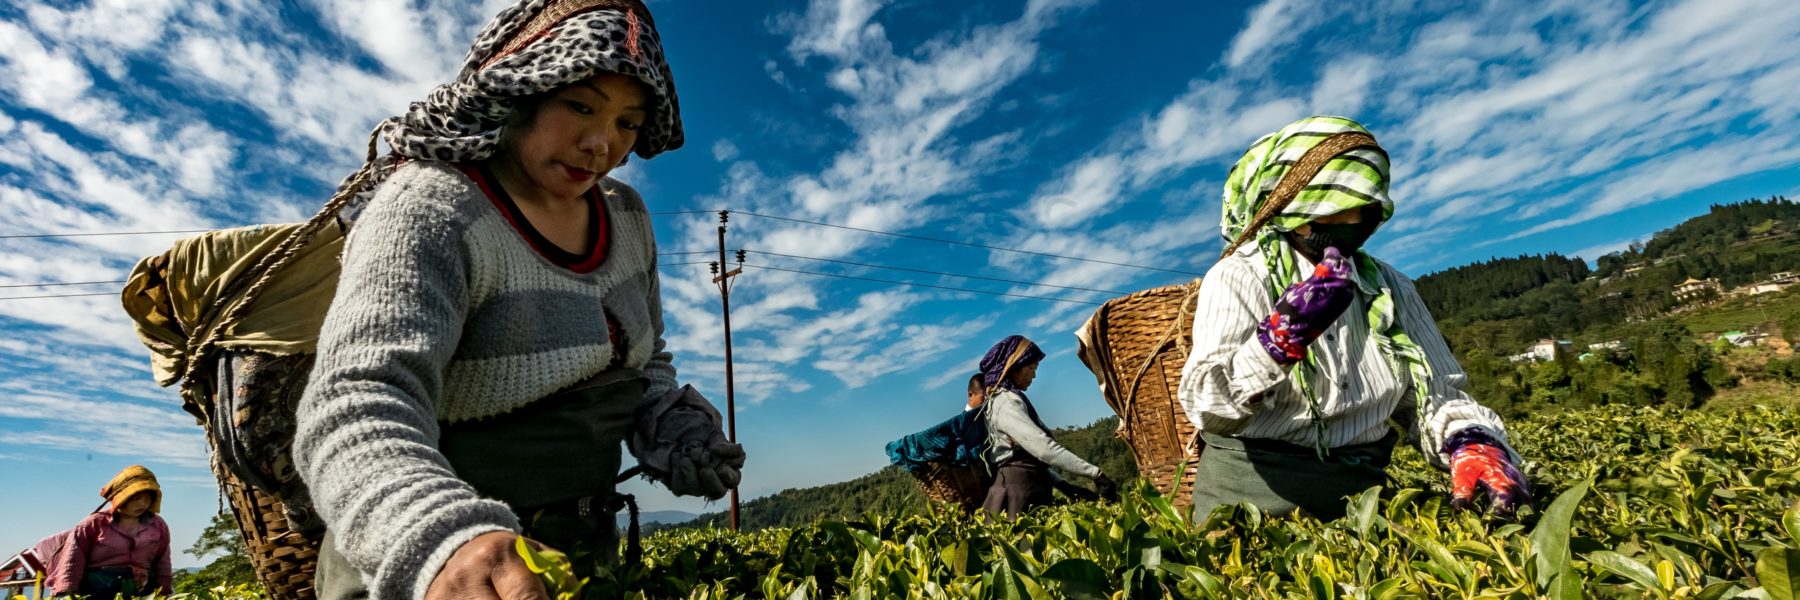 Women farming